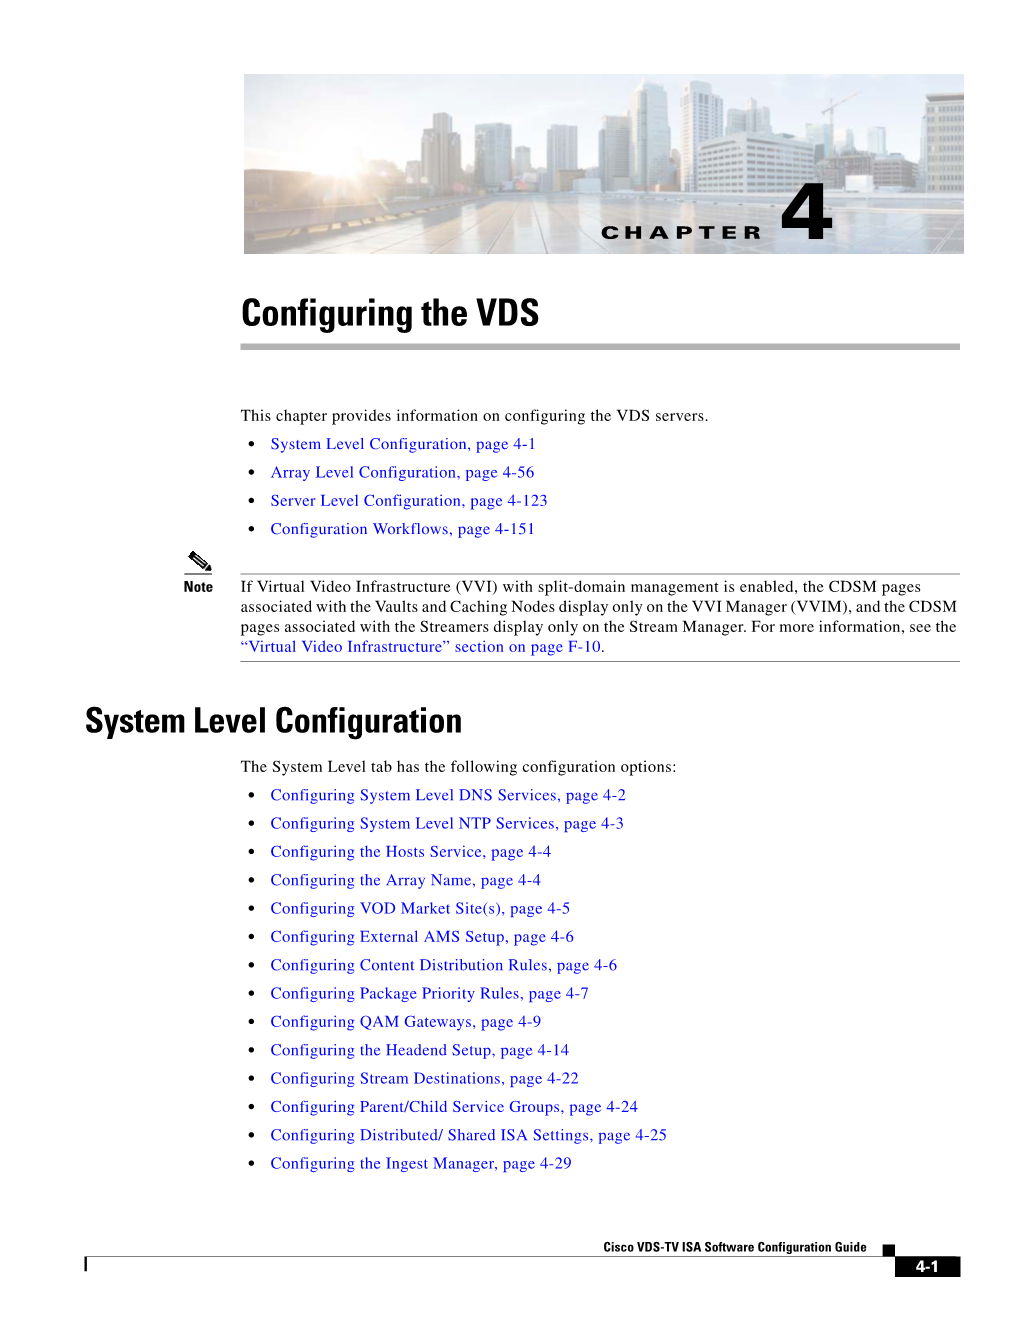 Configuring VDS-TV